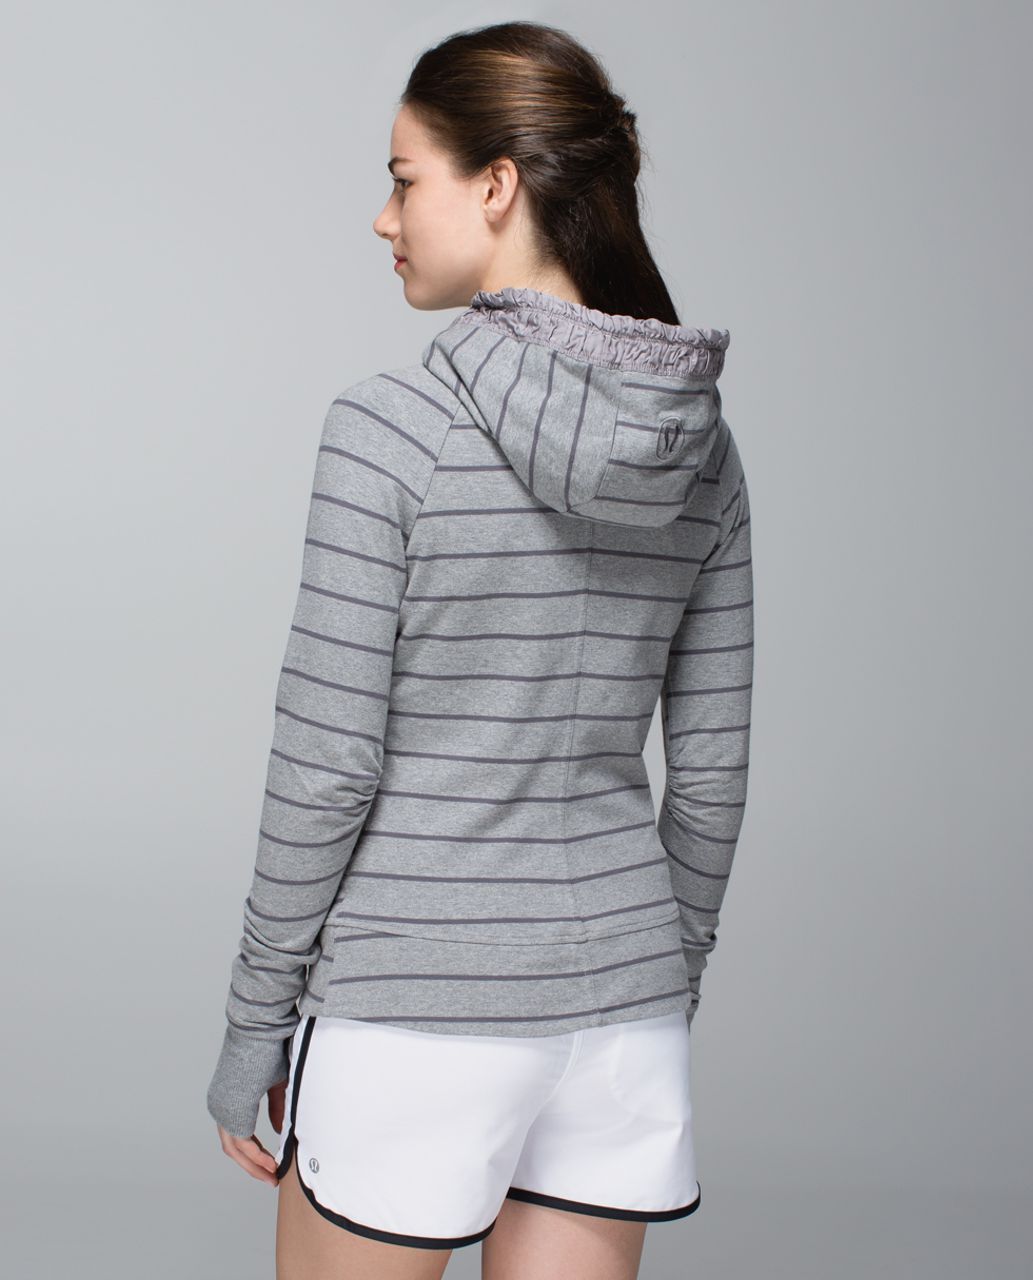 Lululemon Movement Jacket - Cayman Stripe Heathered Medium Grey / Ambient Grey